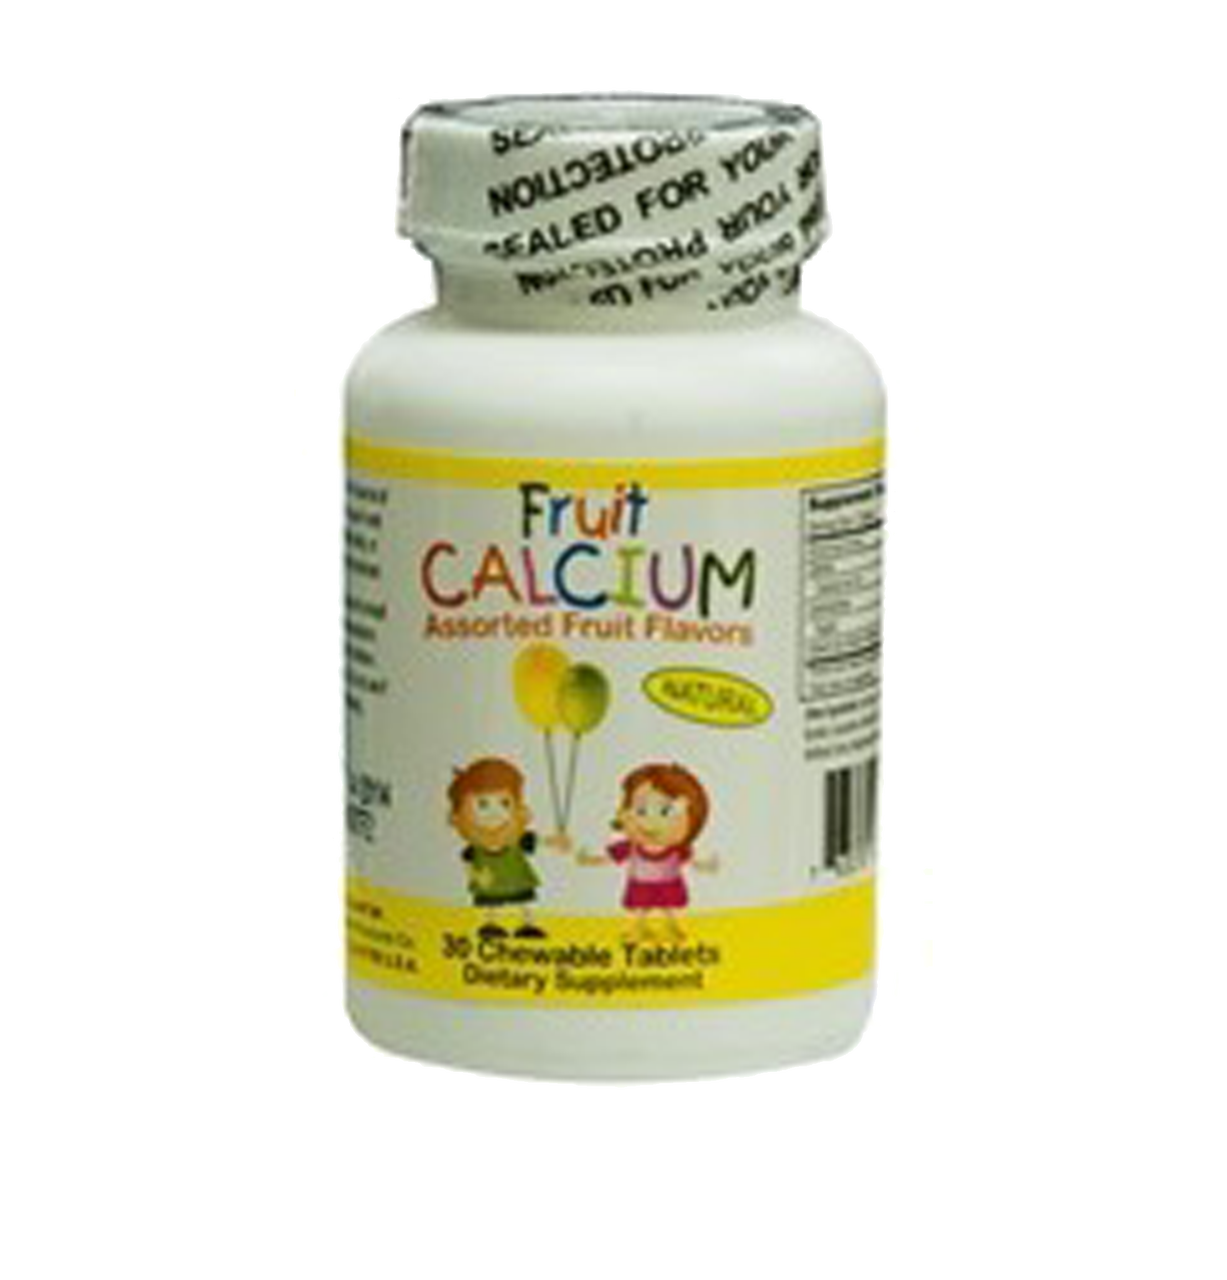 Children's Fruit Calcium Tablets For Age 4+